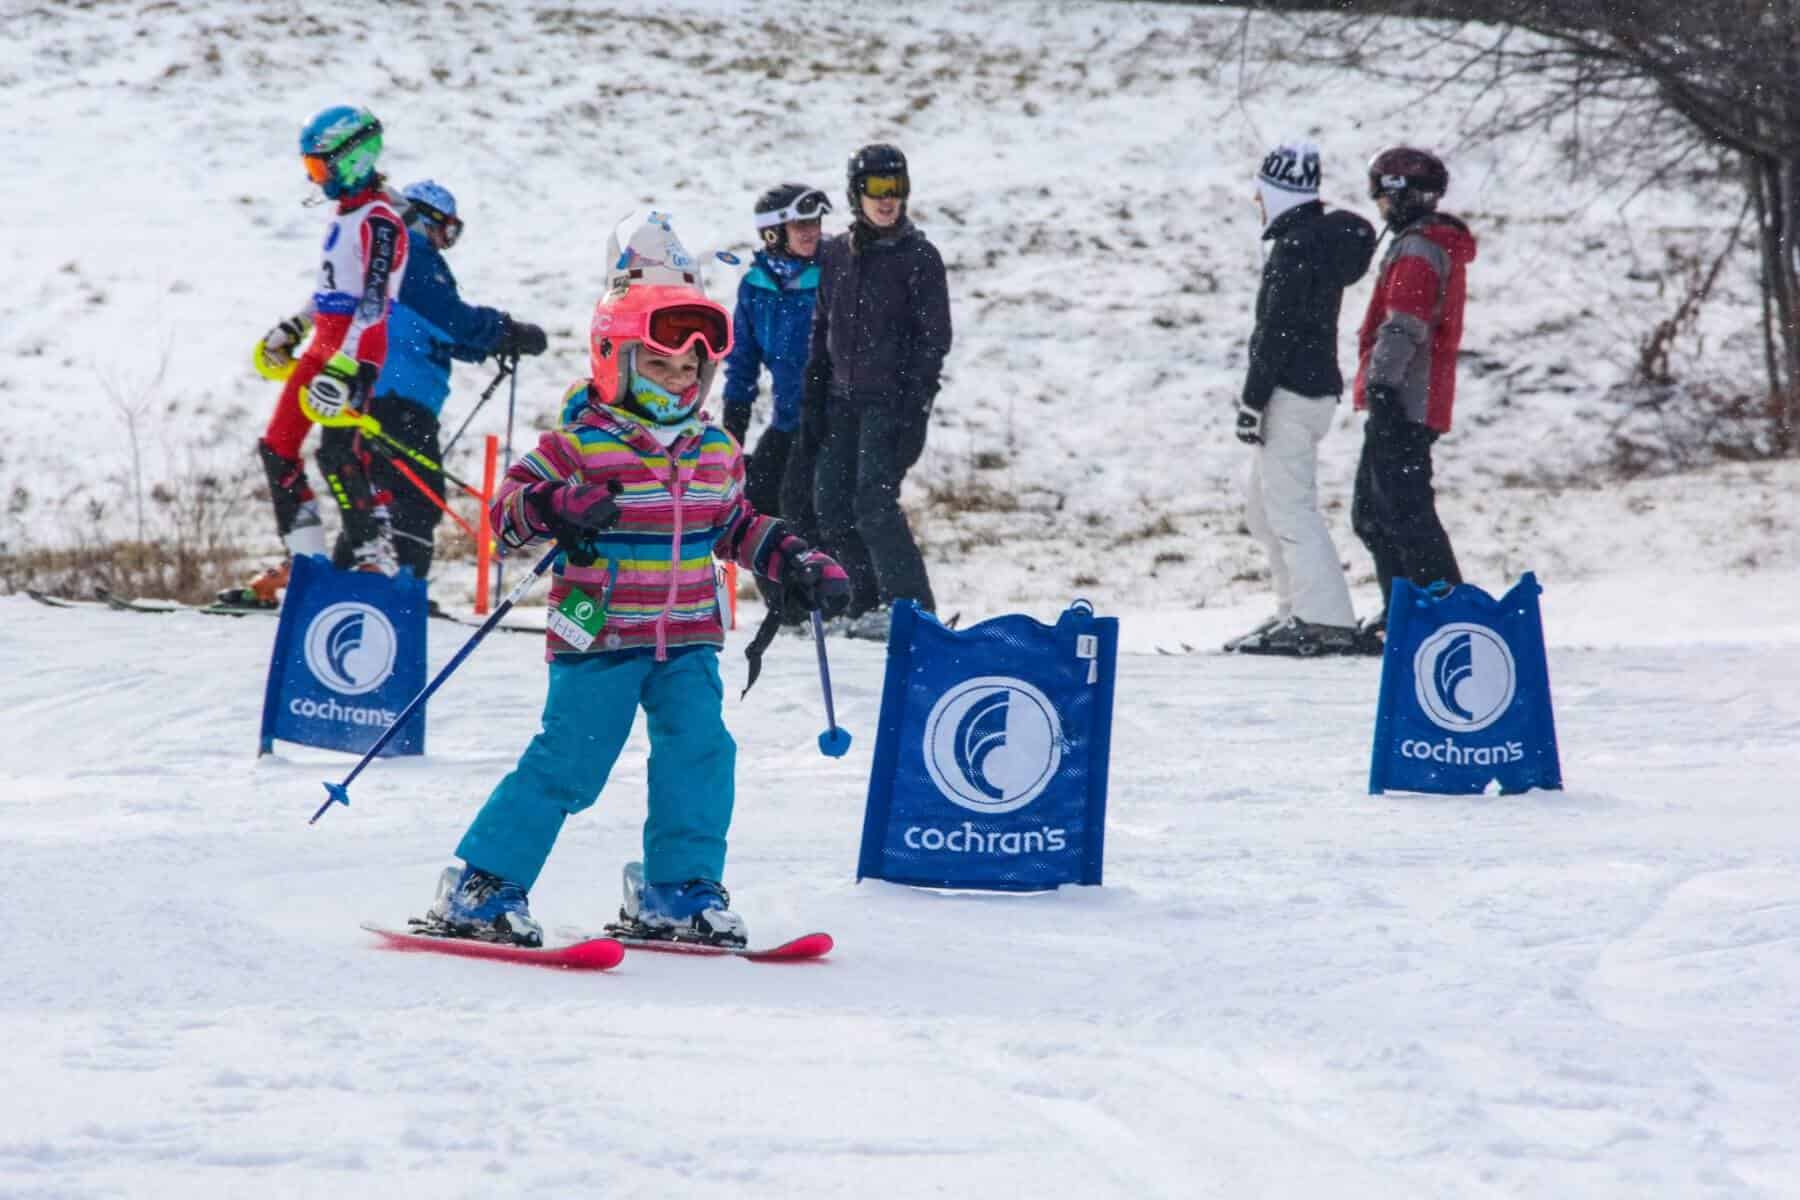 Cochran's Ski Area - Kids Skiing